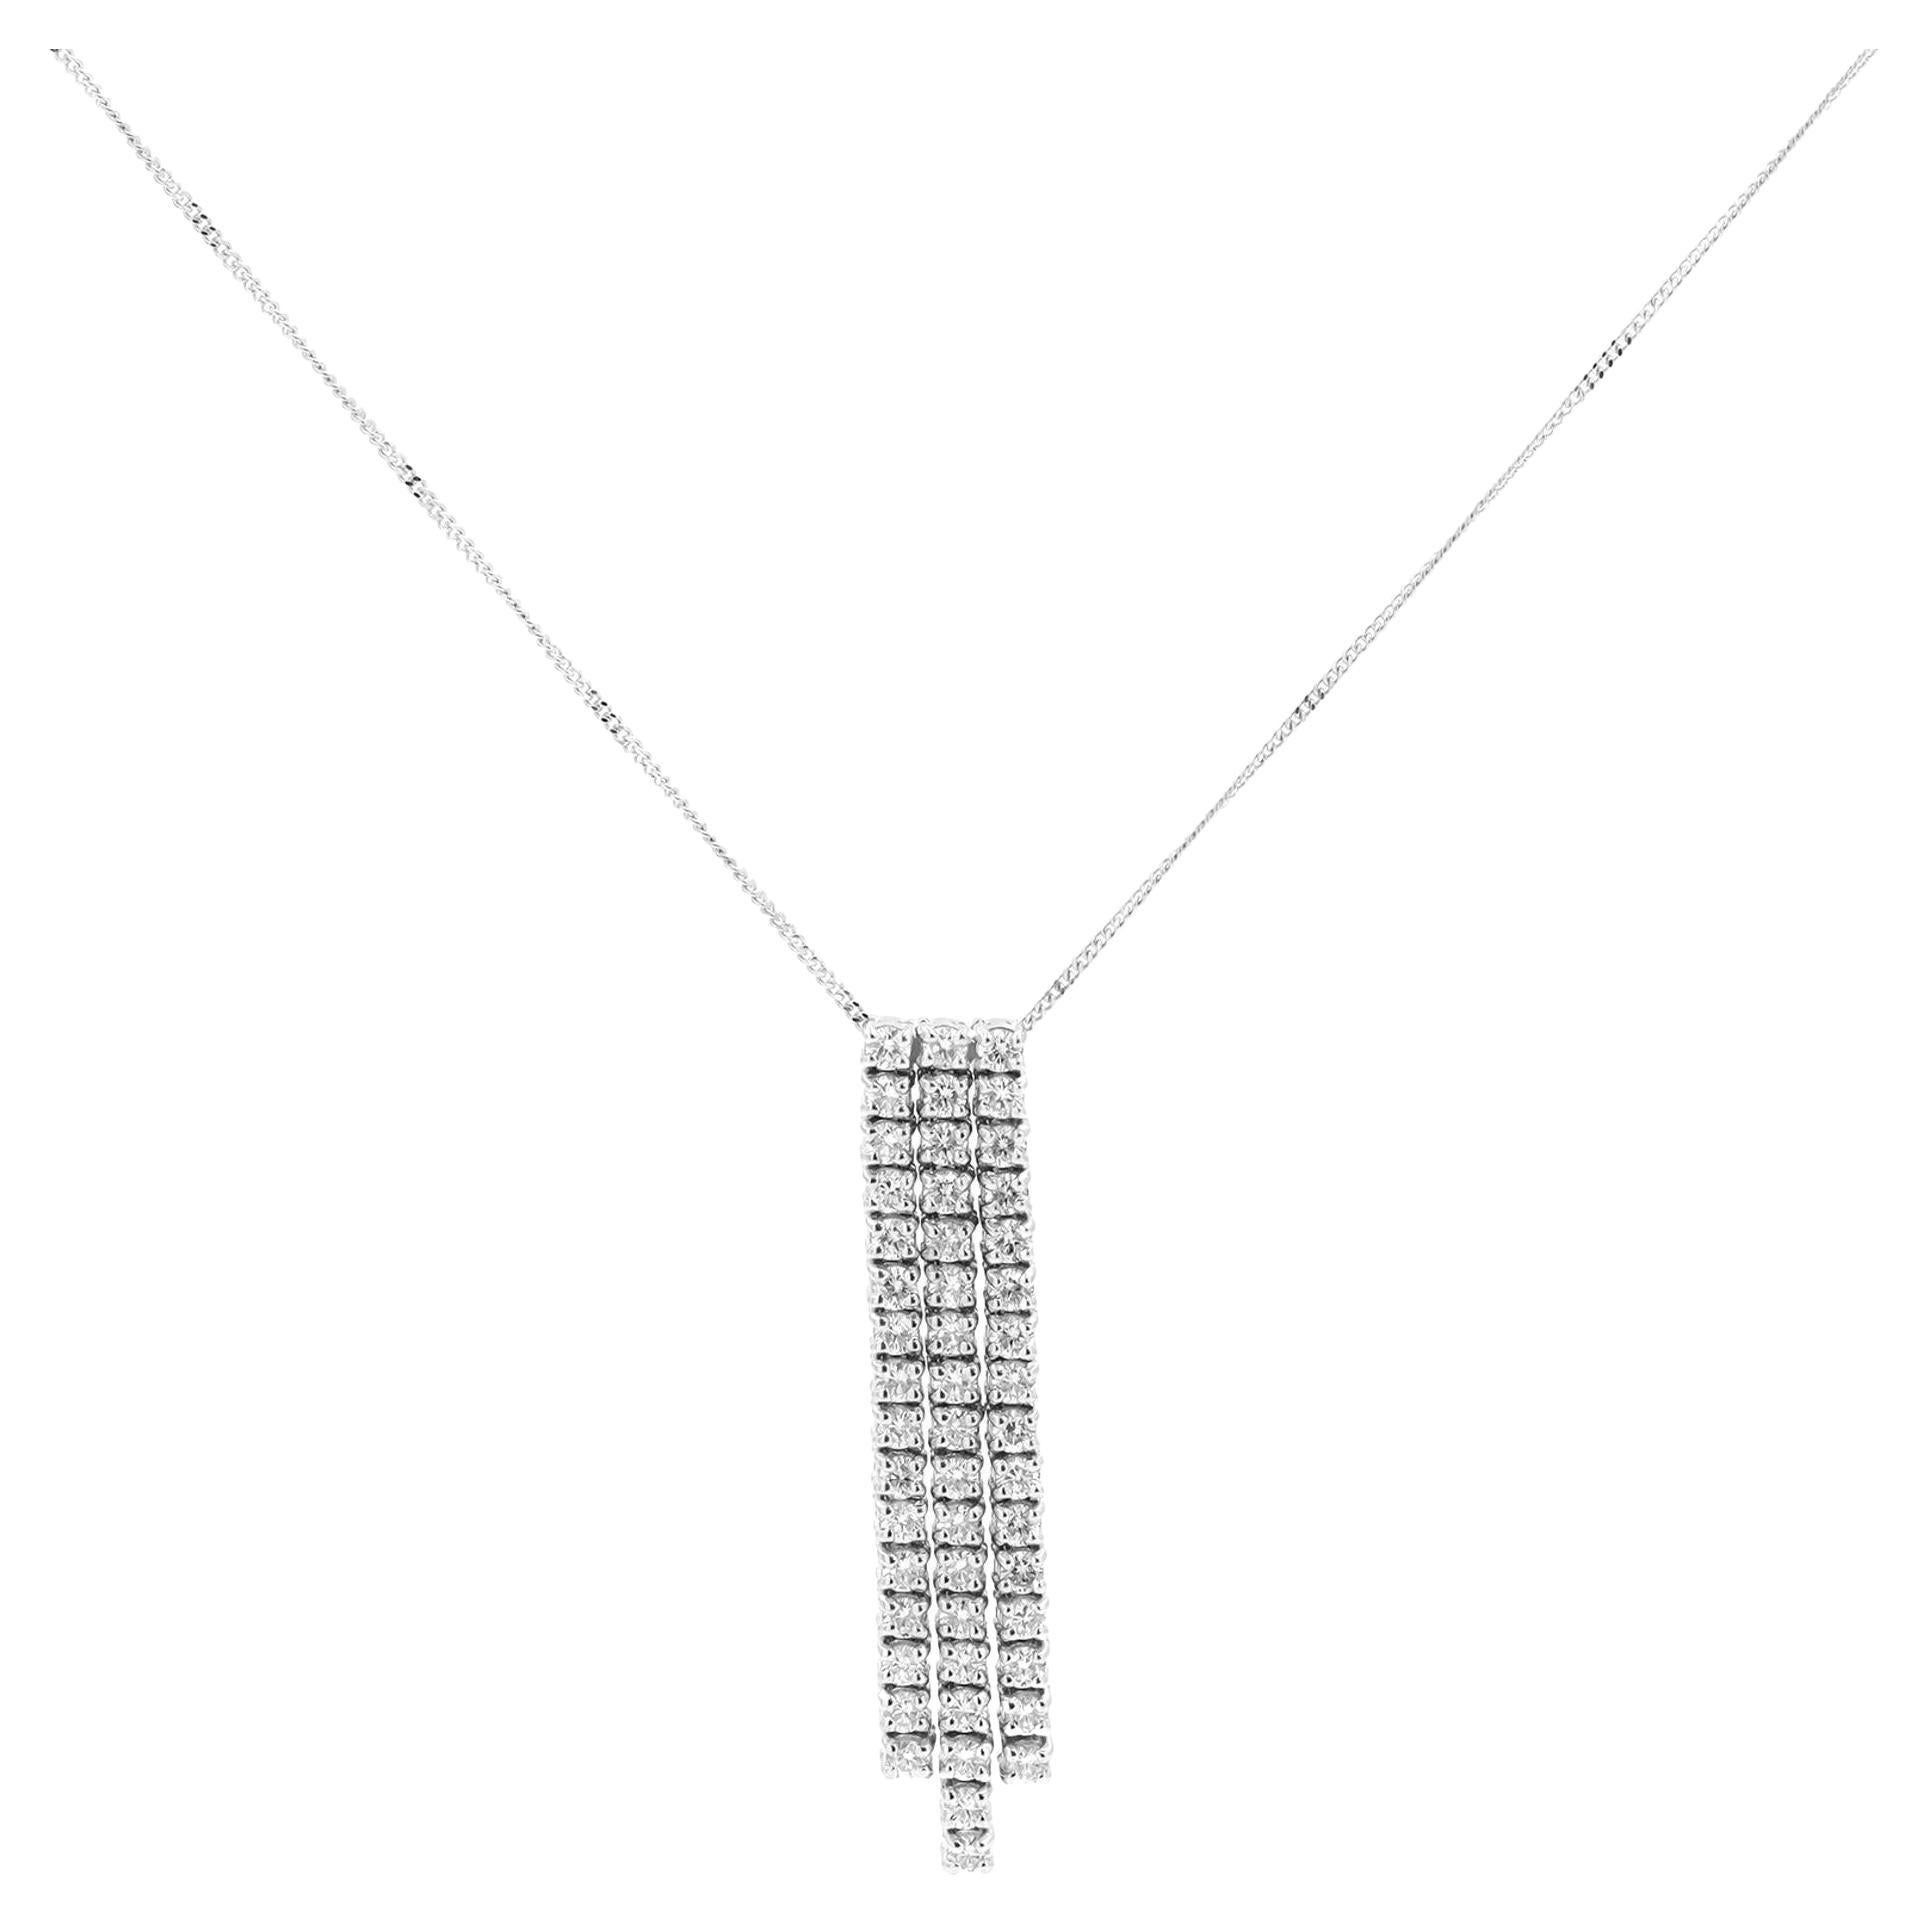 Piero Milano, collier pendentif en or blanc 18 carats avec diamants naturels de 1,68 carat poids total